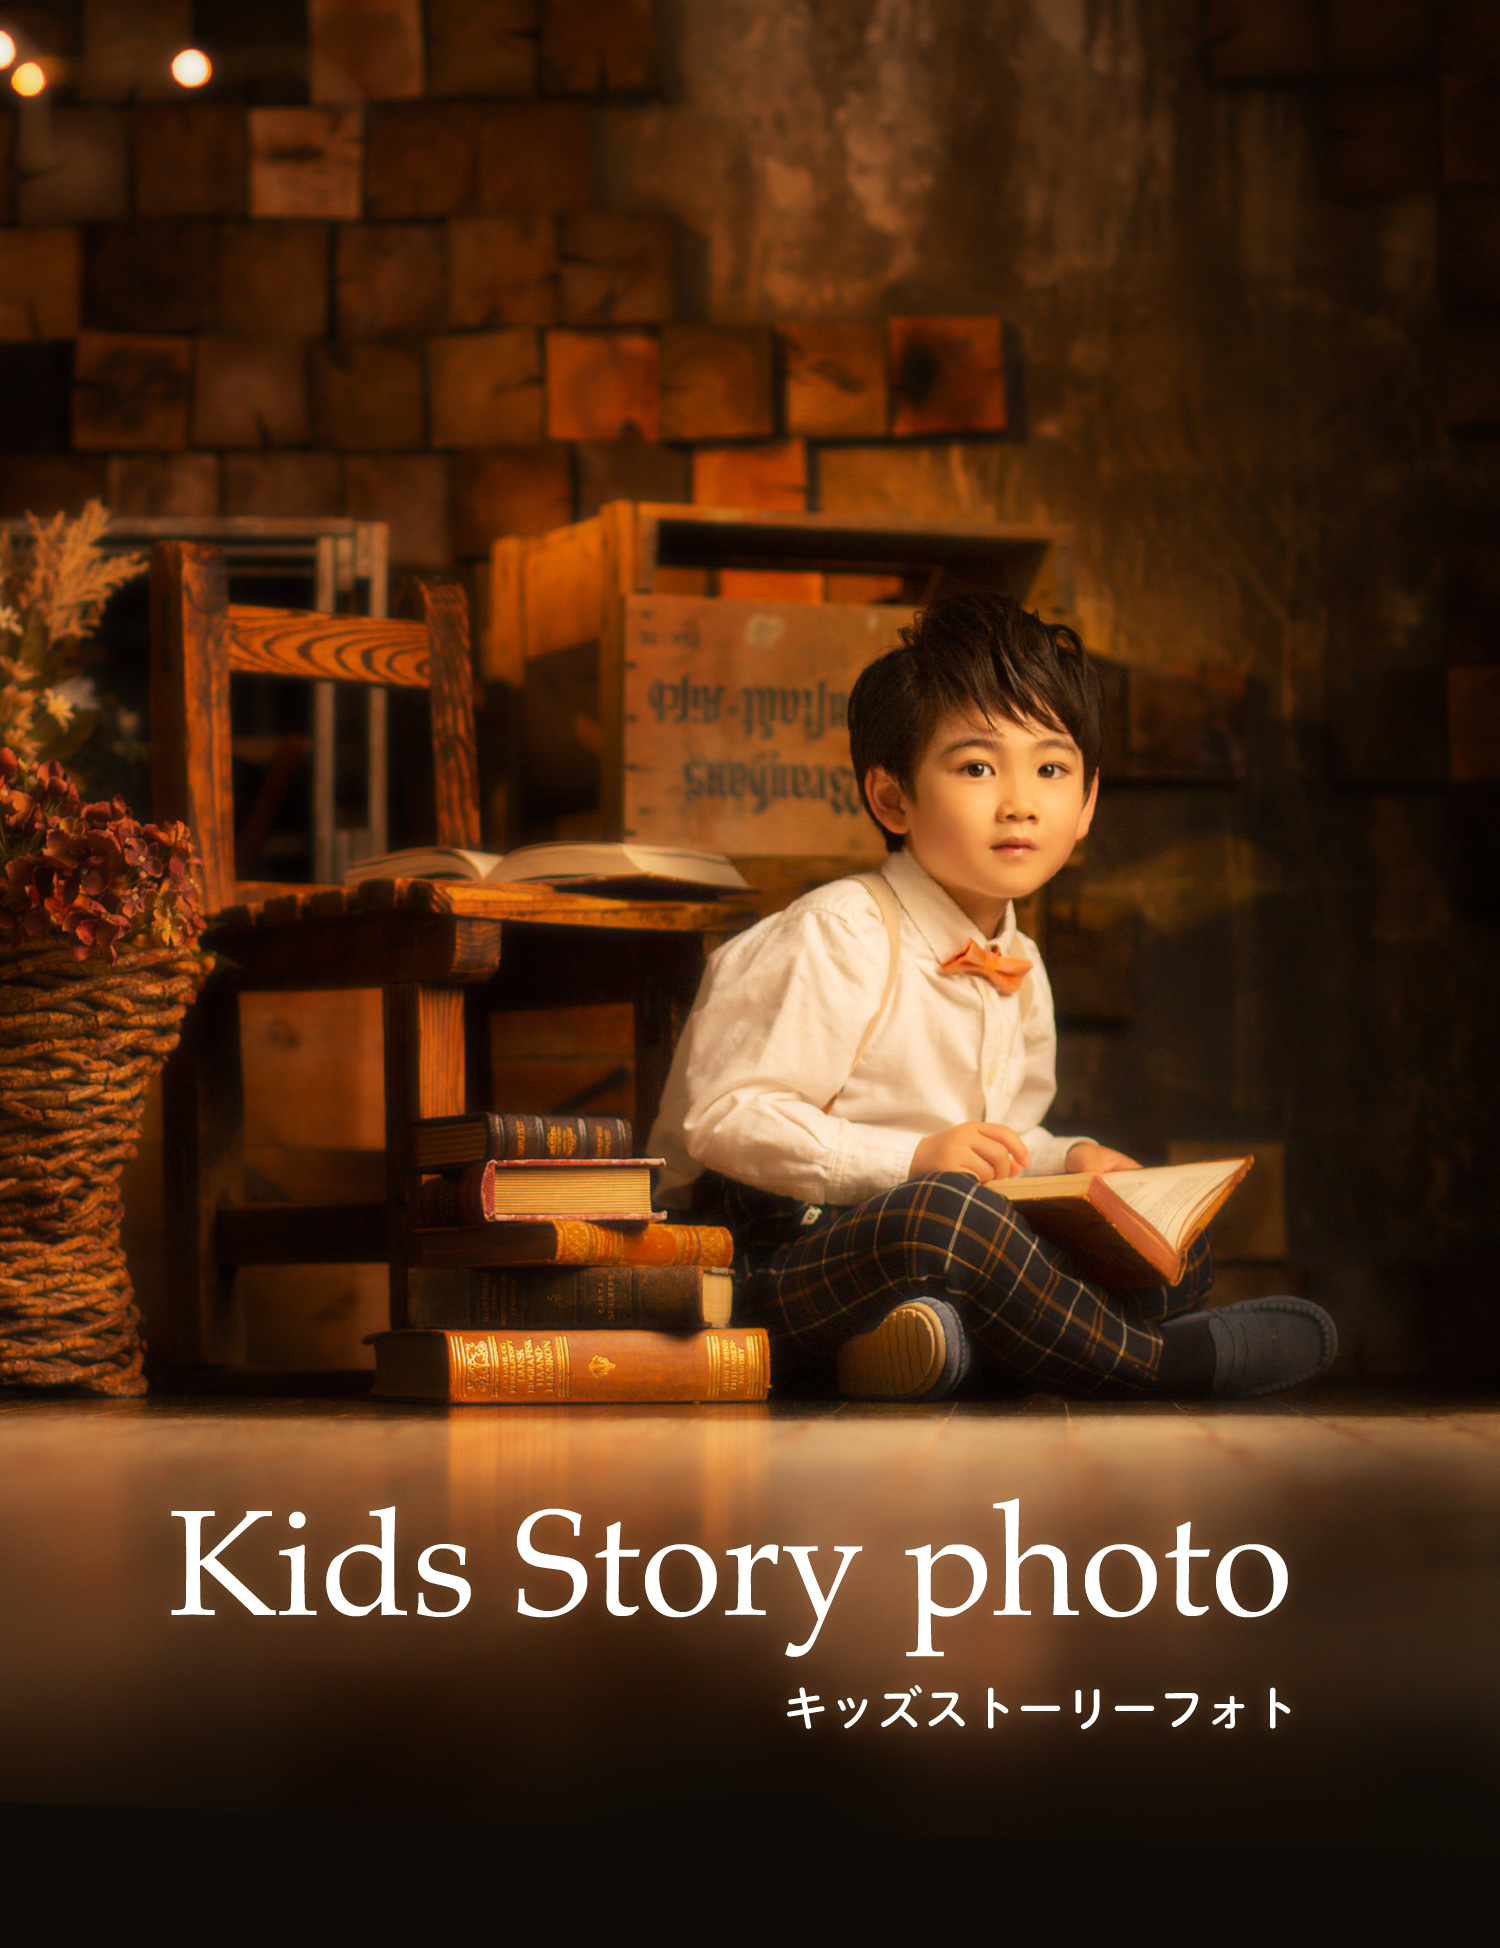 Kids Story photo